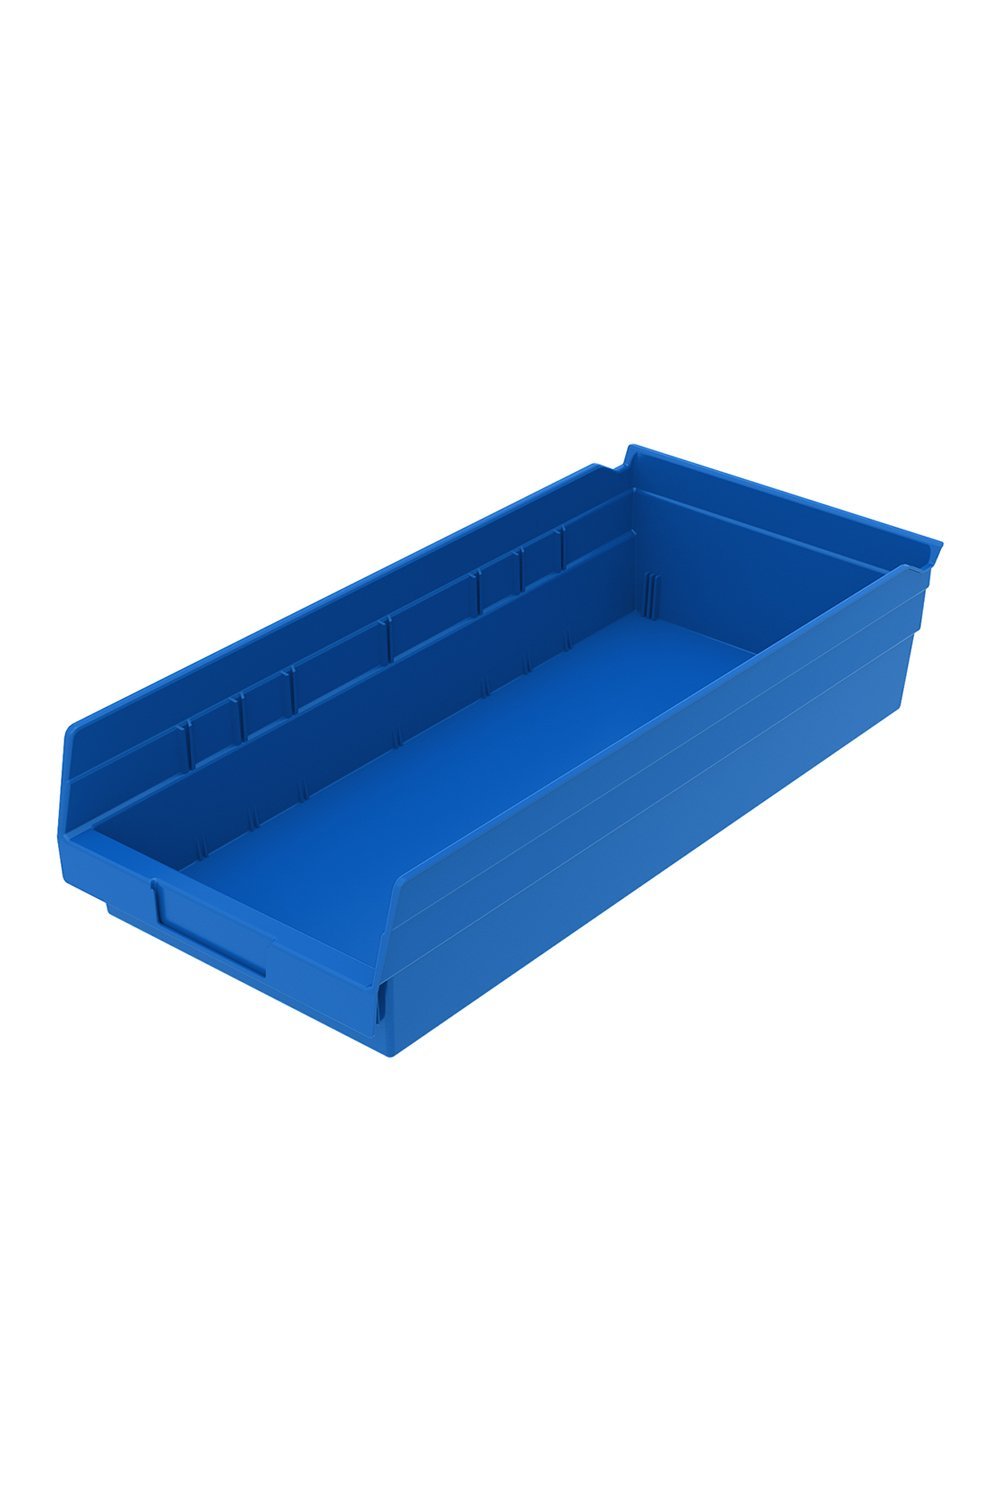 Shelf Bin for 18"D Shelves Bins & Containers Acart 17-7/8'' x 8-3/8'' x 4'' Blue 